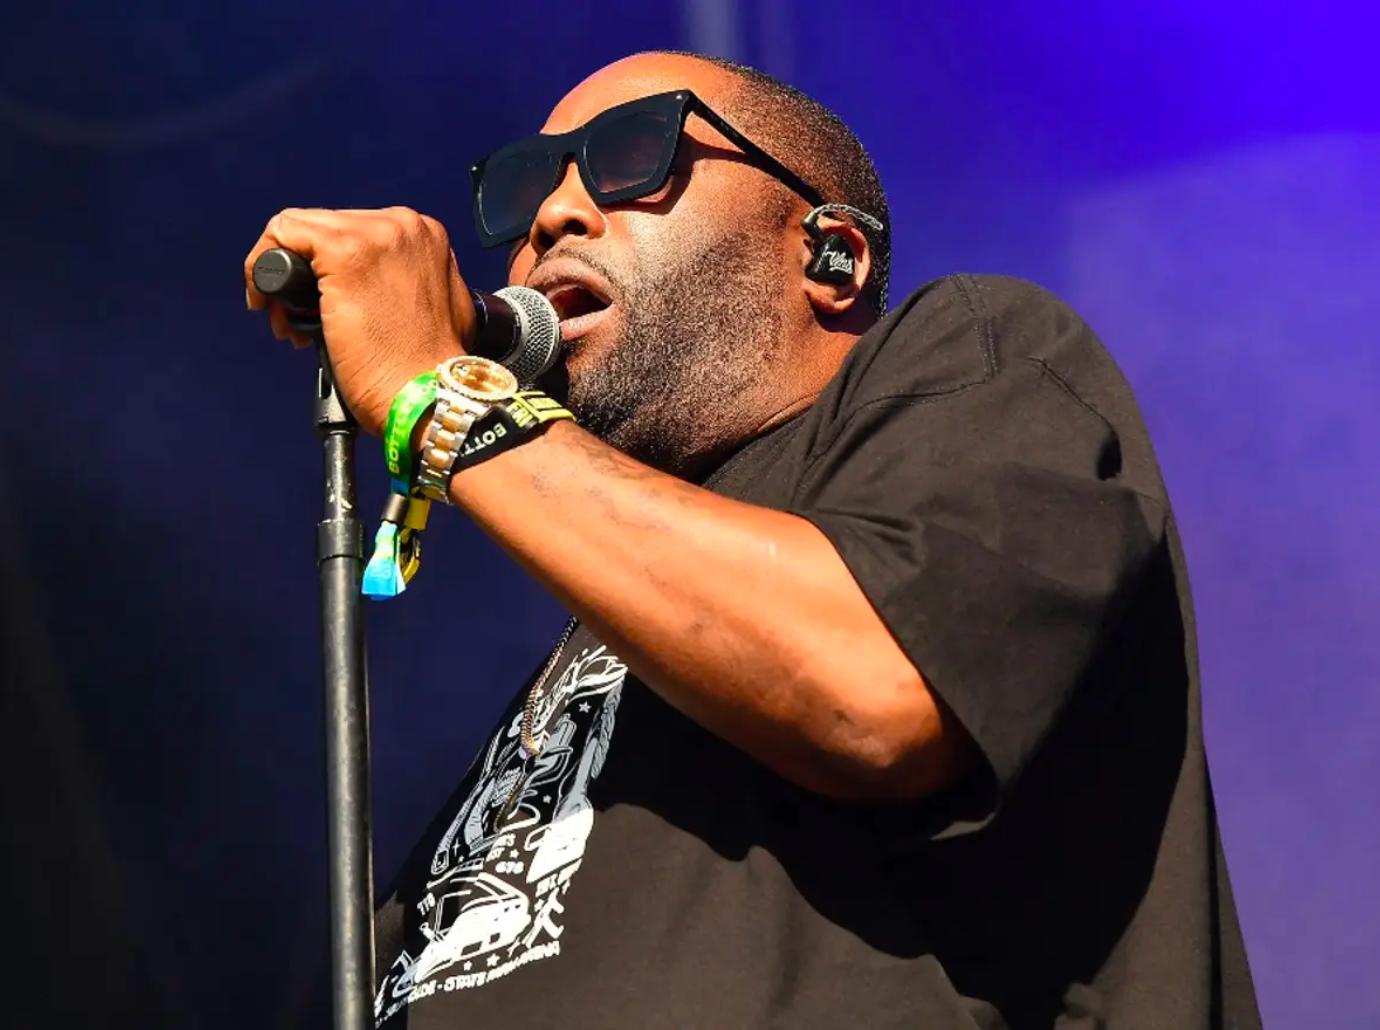 Rapper Killer Mike Booked For Battery After Grammys Citizen's Arrest